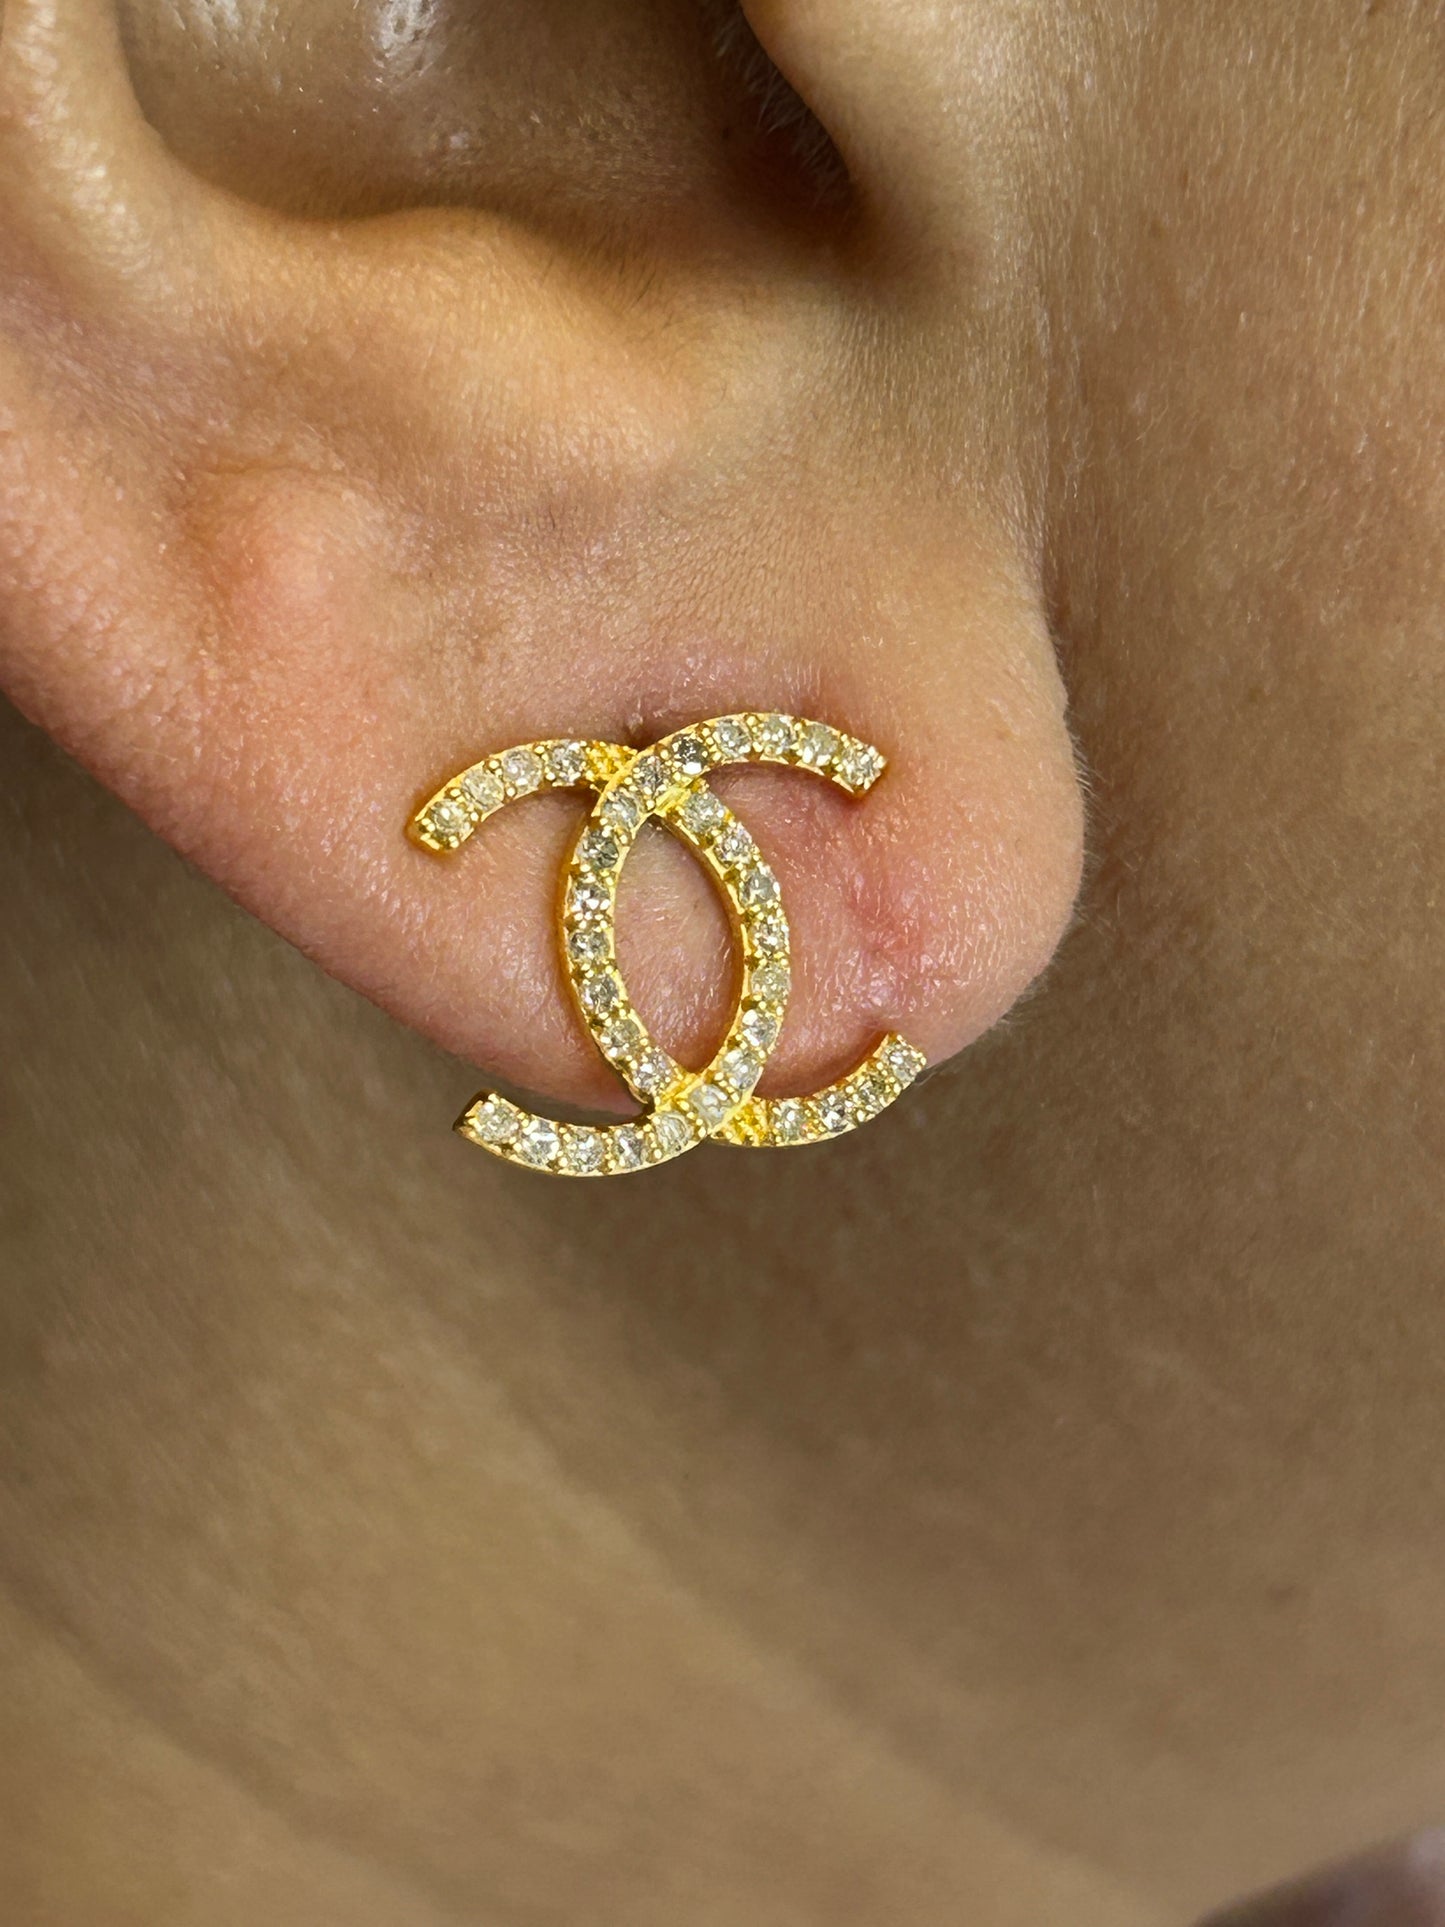 14k Solid Gold Diamond Stud Earring. Genuine handmade pave diamond Earring. 14k Solid Gold Diamond Earring..